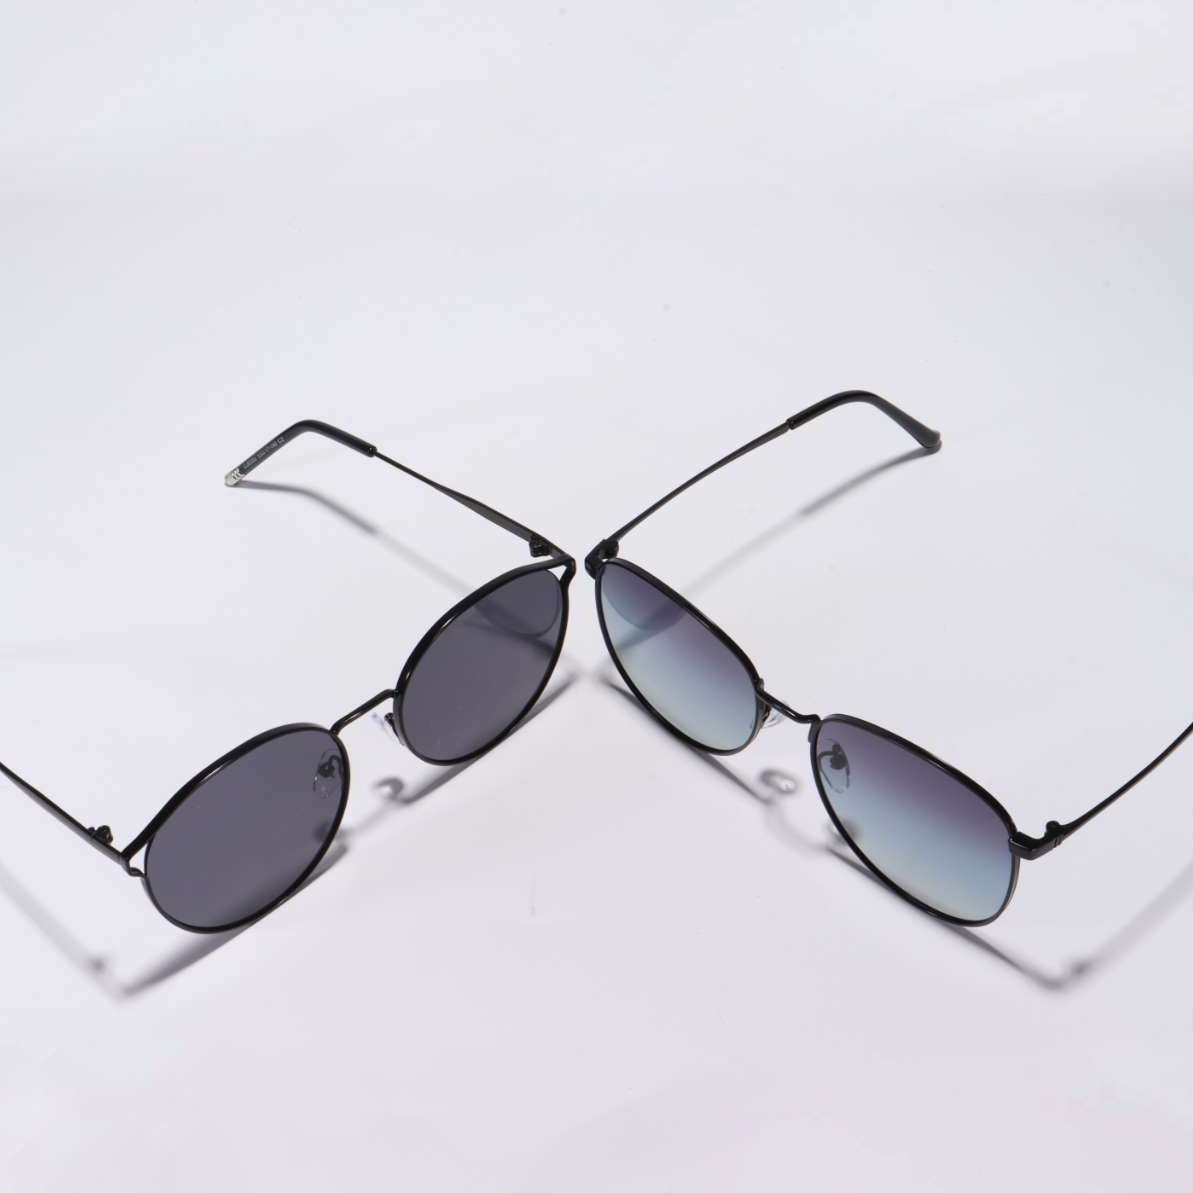 A comfy round sunglasses makes your day! 🤩👉bit.ly/3WOAqid

#abdosyglasses  #frame #pollyframe #eyeglassesstyle #eyeglassesfashion #blackglases